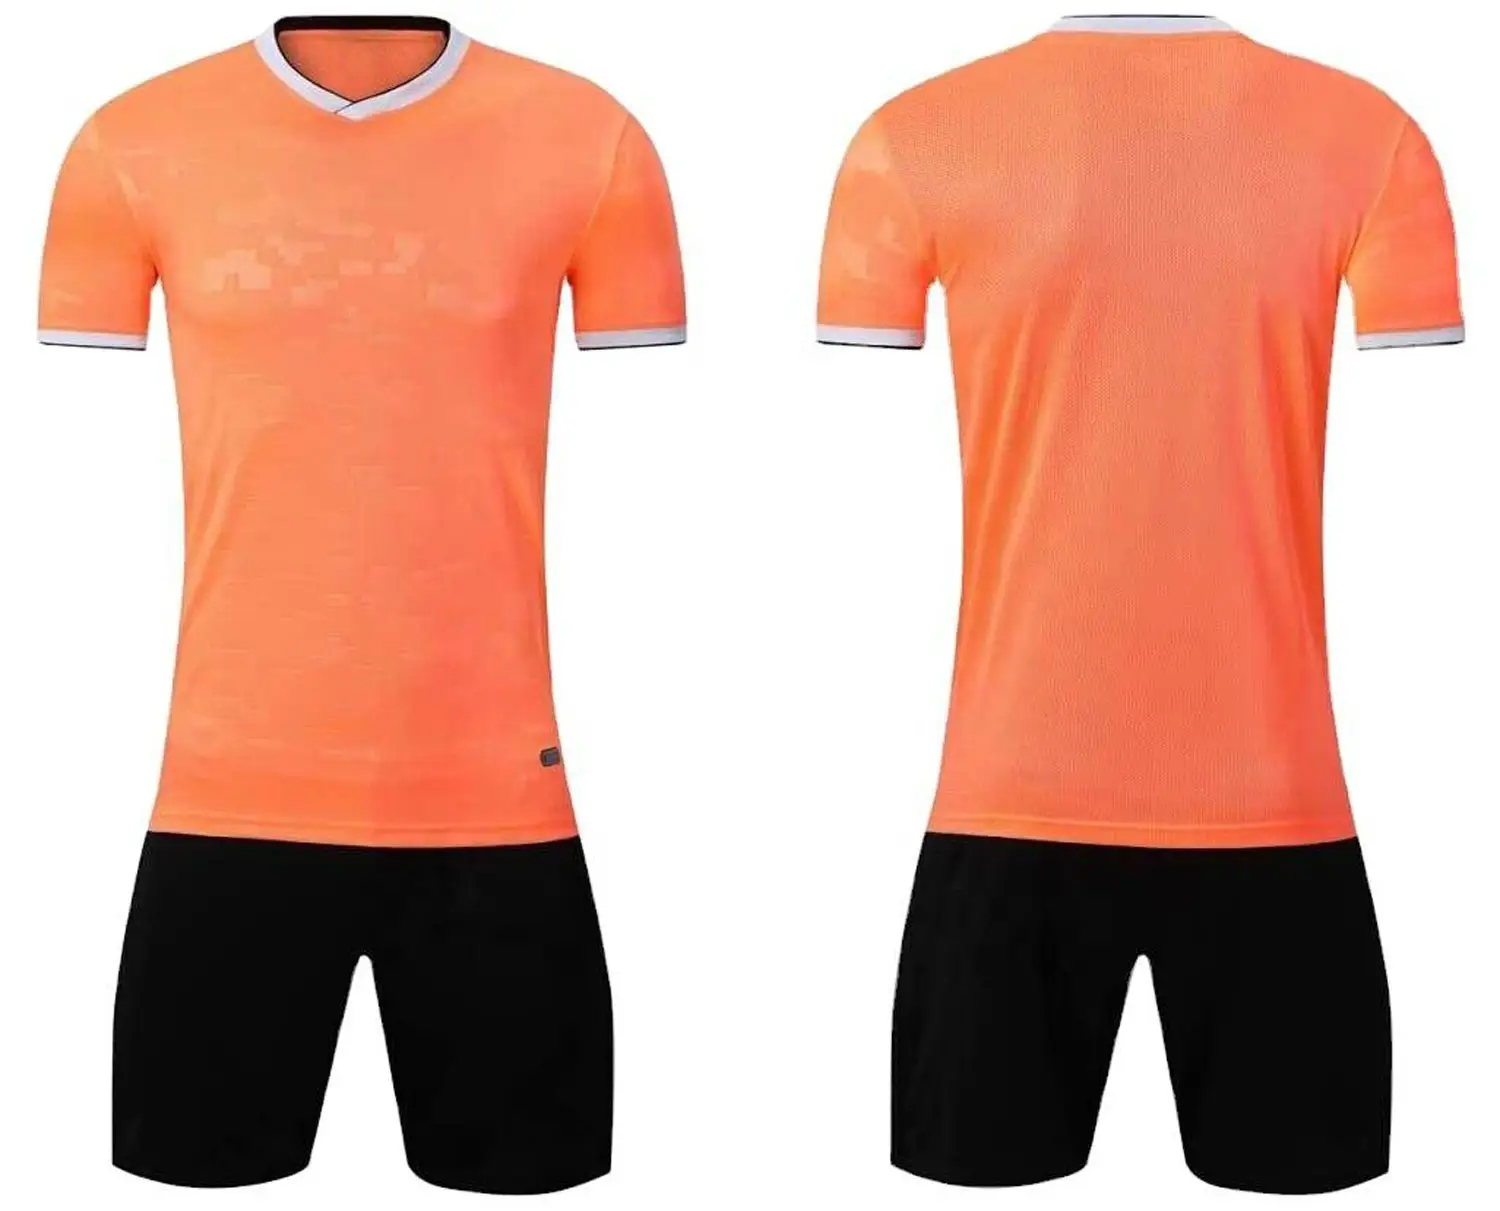 Men's Workout Clothing Customized Printing Foot Ball Uniform Men Soccer Jersey Set.